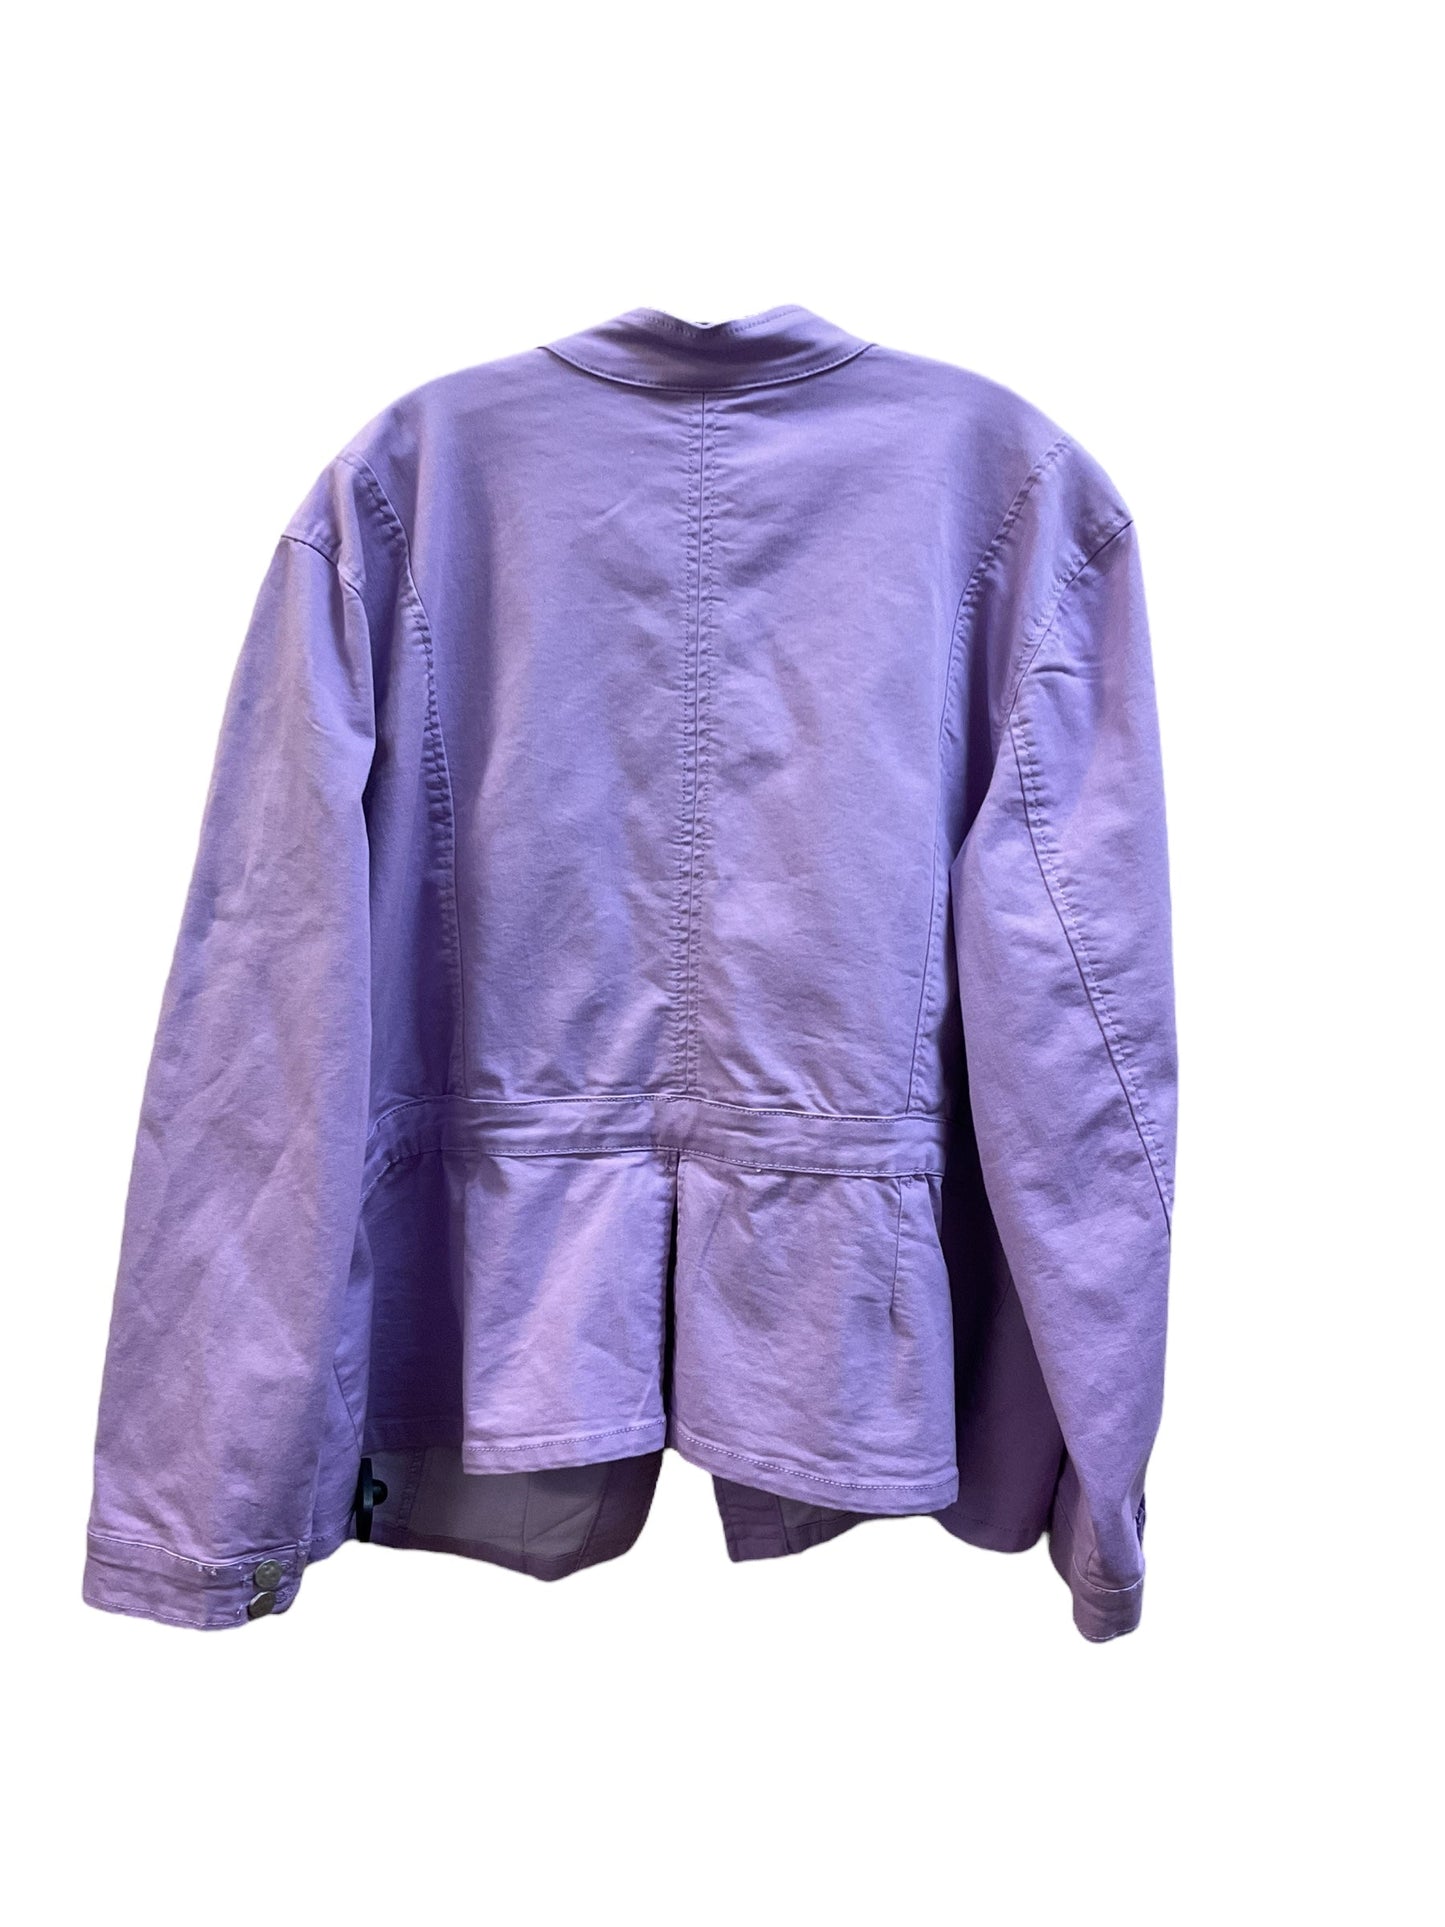 Jacket Denim By Ashley Stewart  Size: 4x